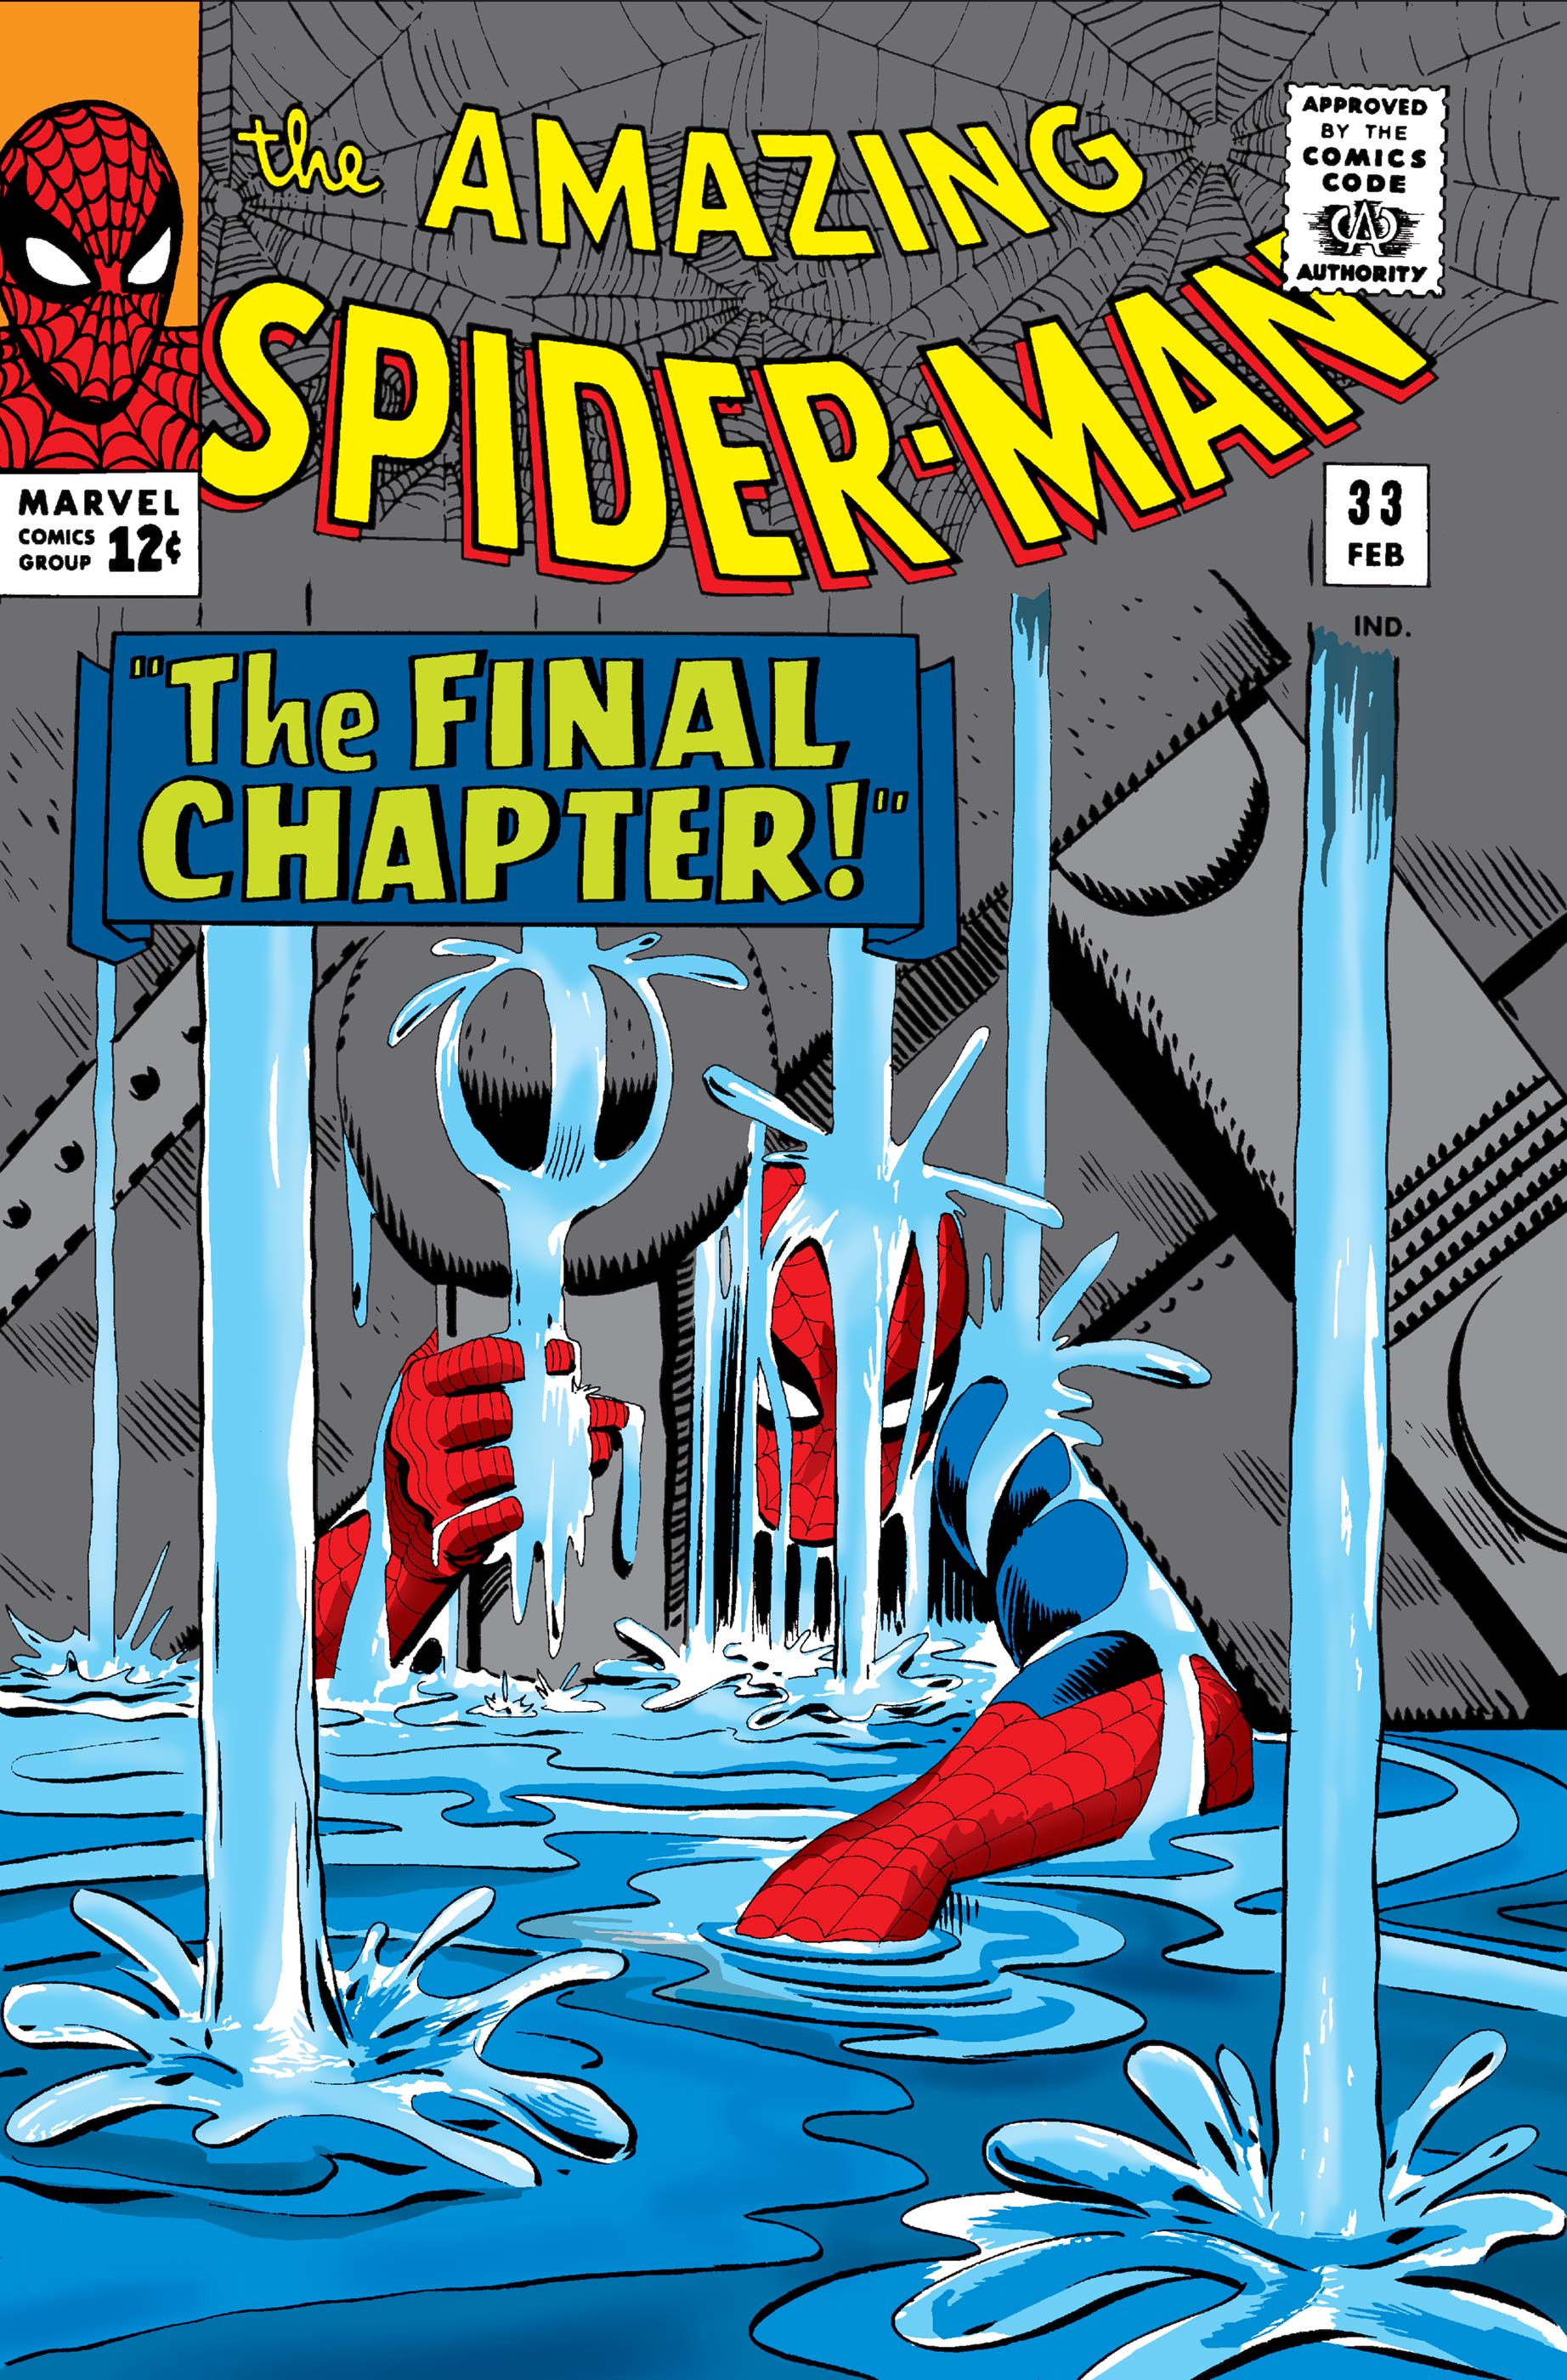 The Amazing Spider-Man (1963) #33